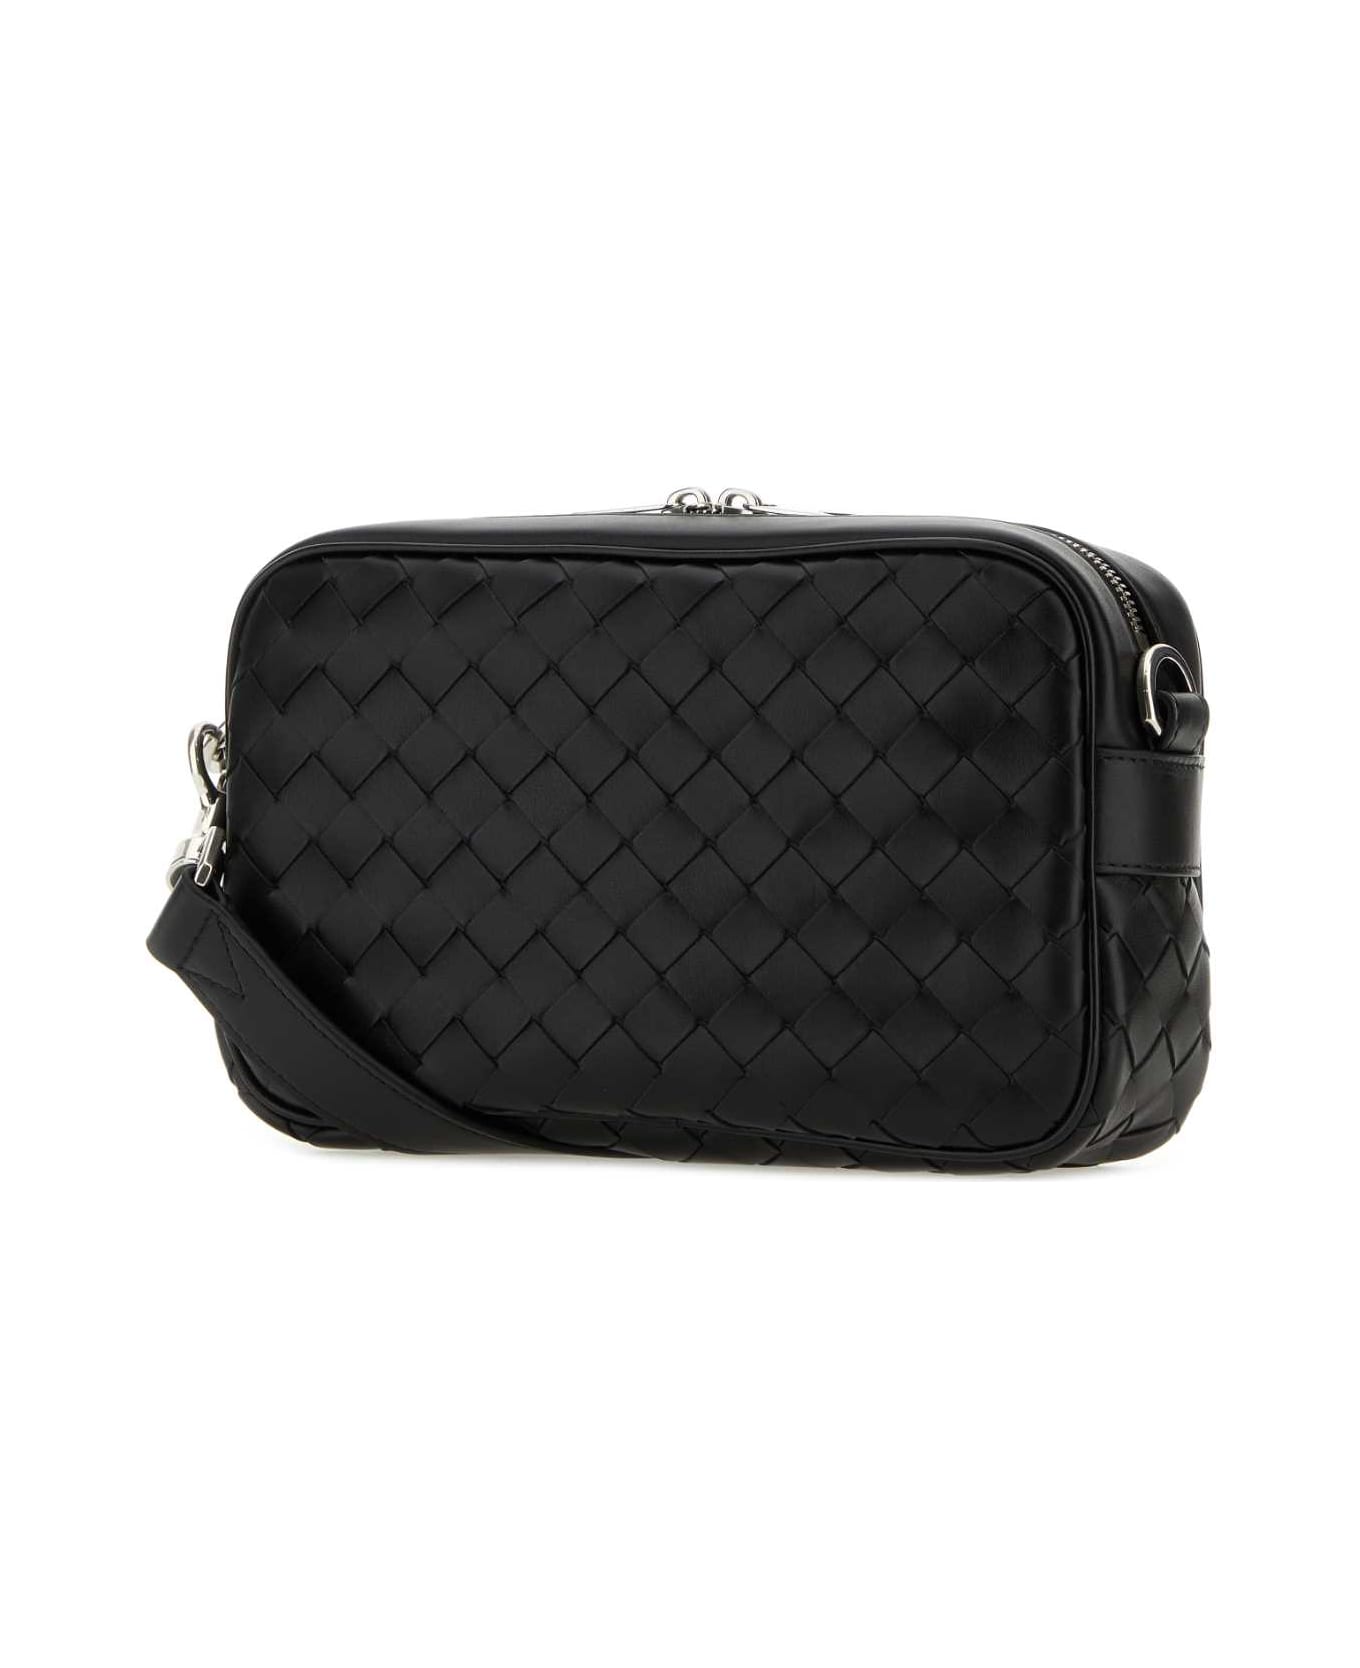 Bottega Veneta Black Leather Crossbody Bag - BLACKSILVER